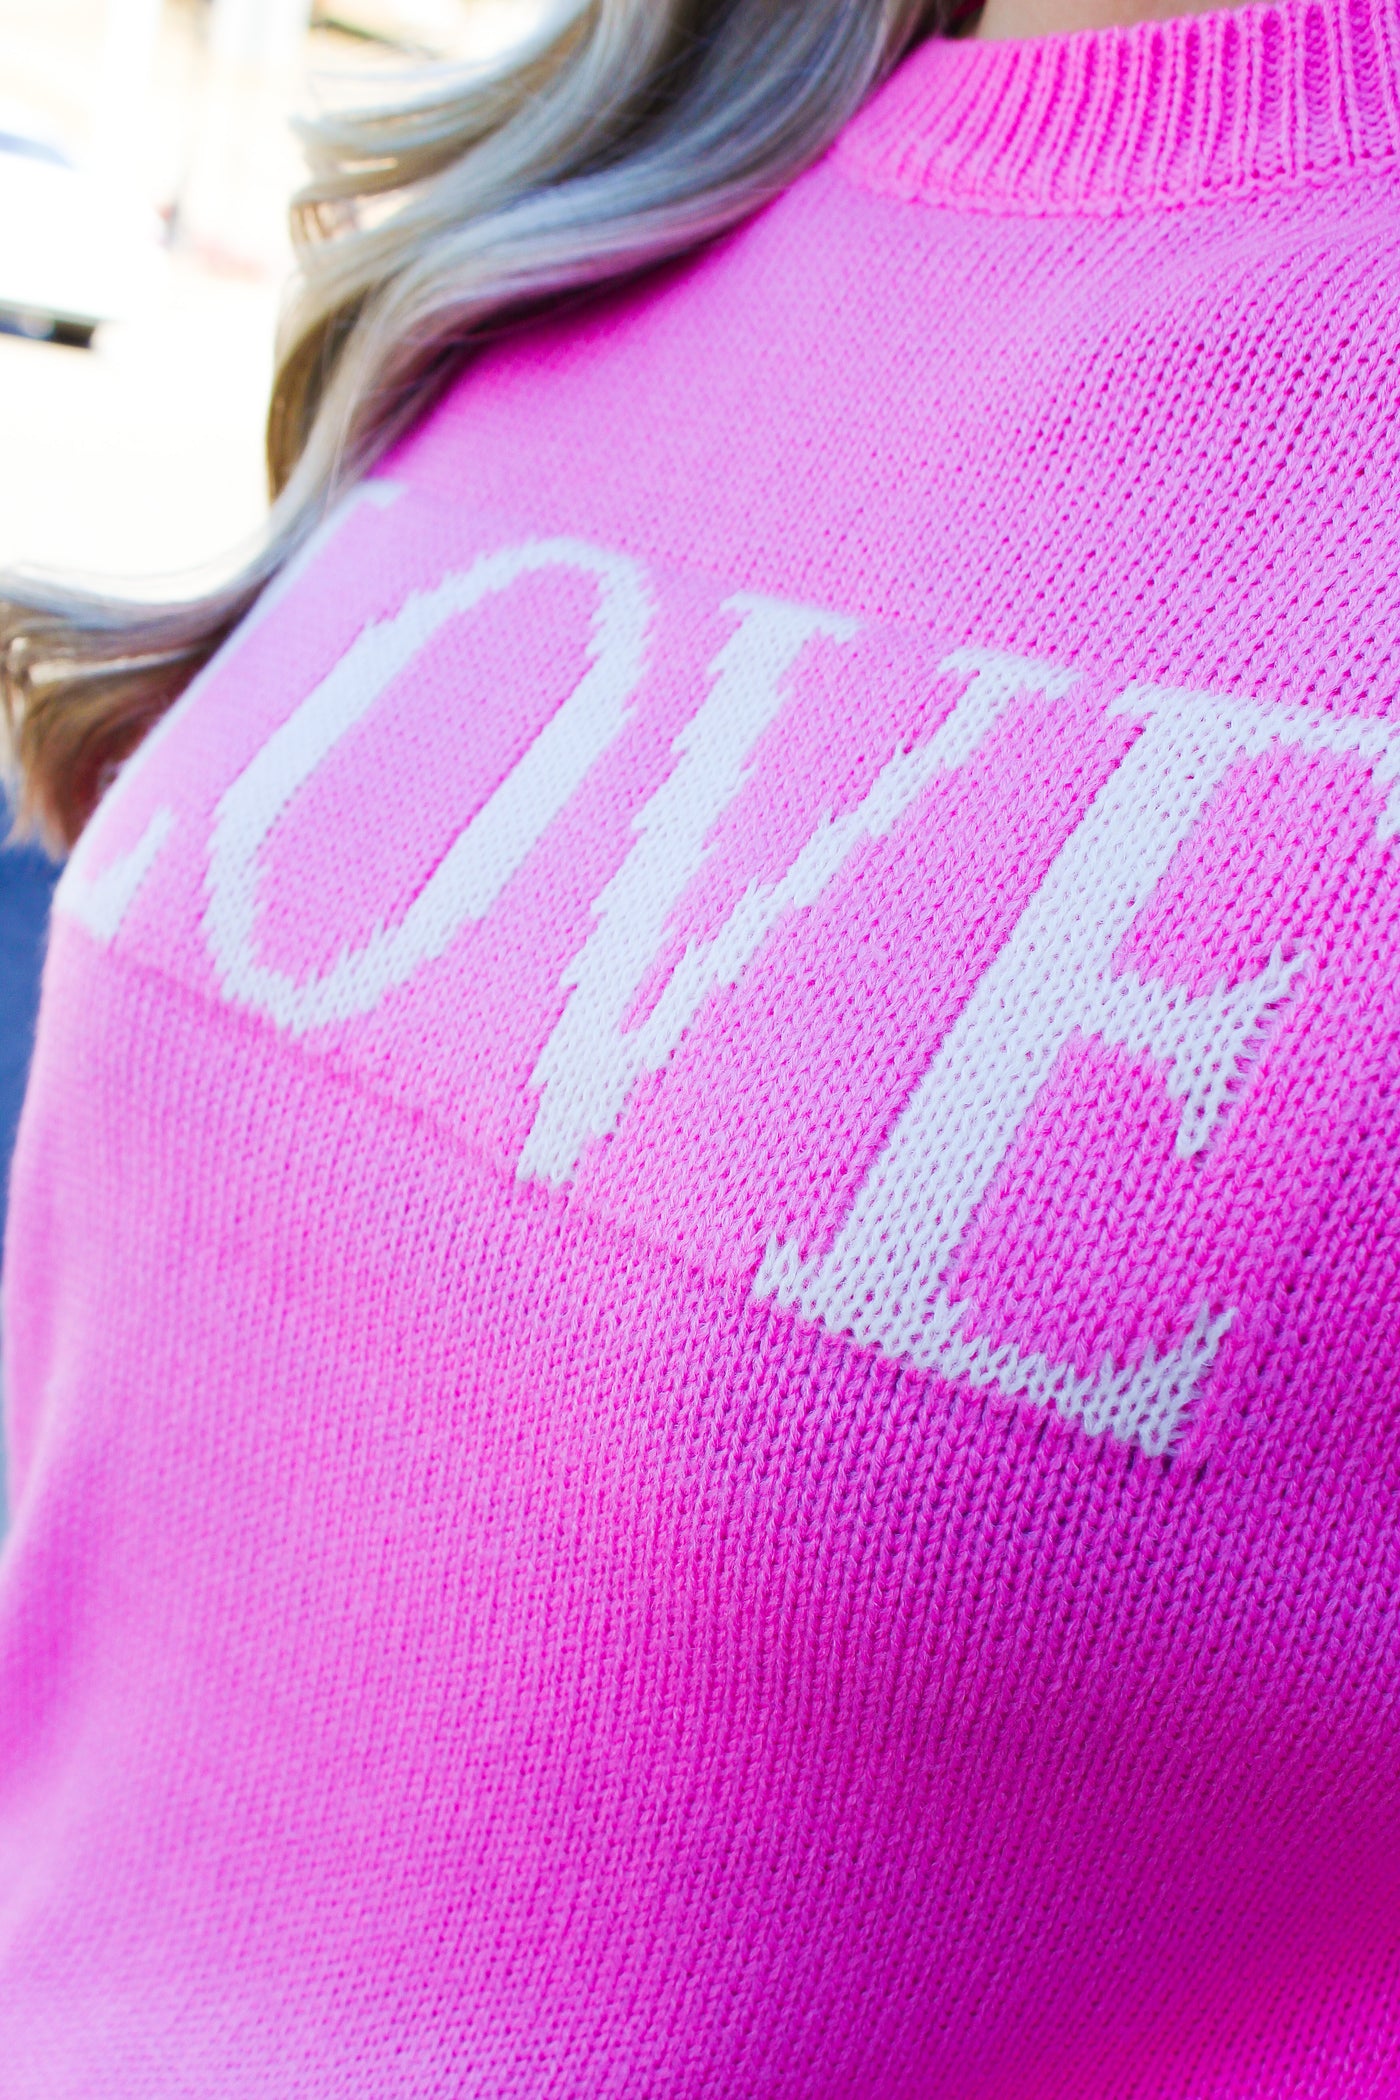 "LOVE" sweater